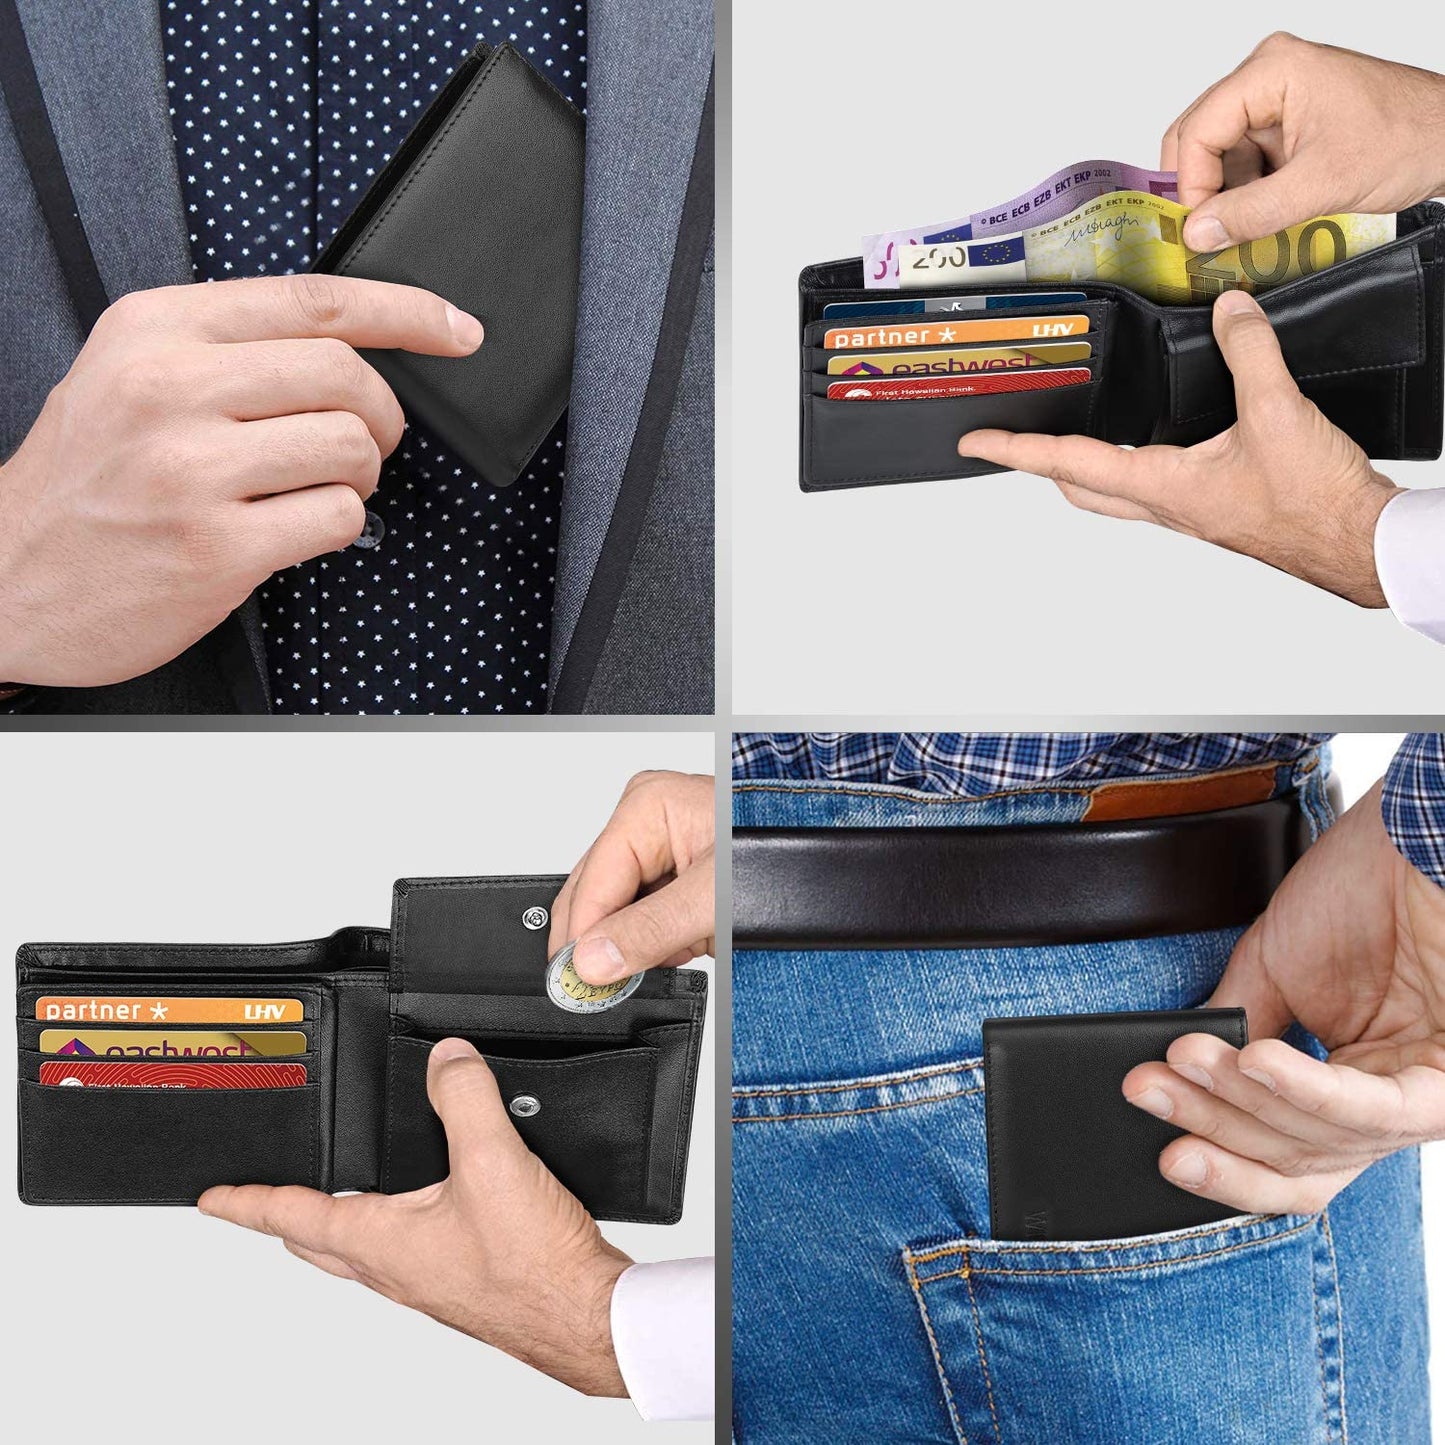 Genuine Leather Wallet Men Classic Black Soft Purse Coin Pocket Credit Card Holder